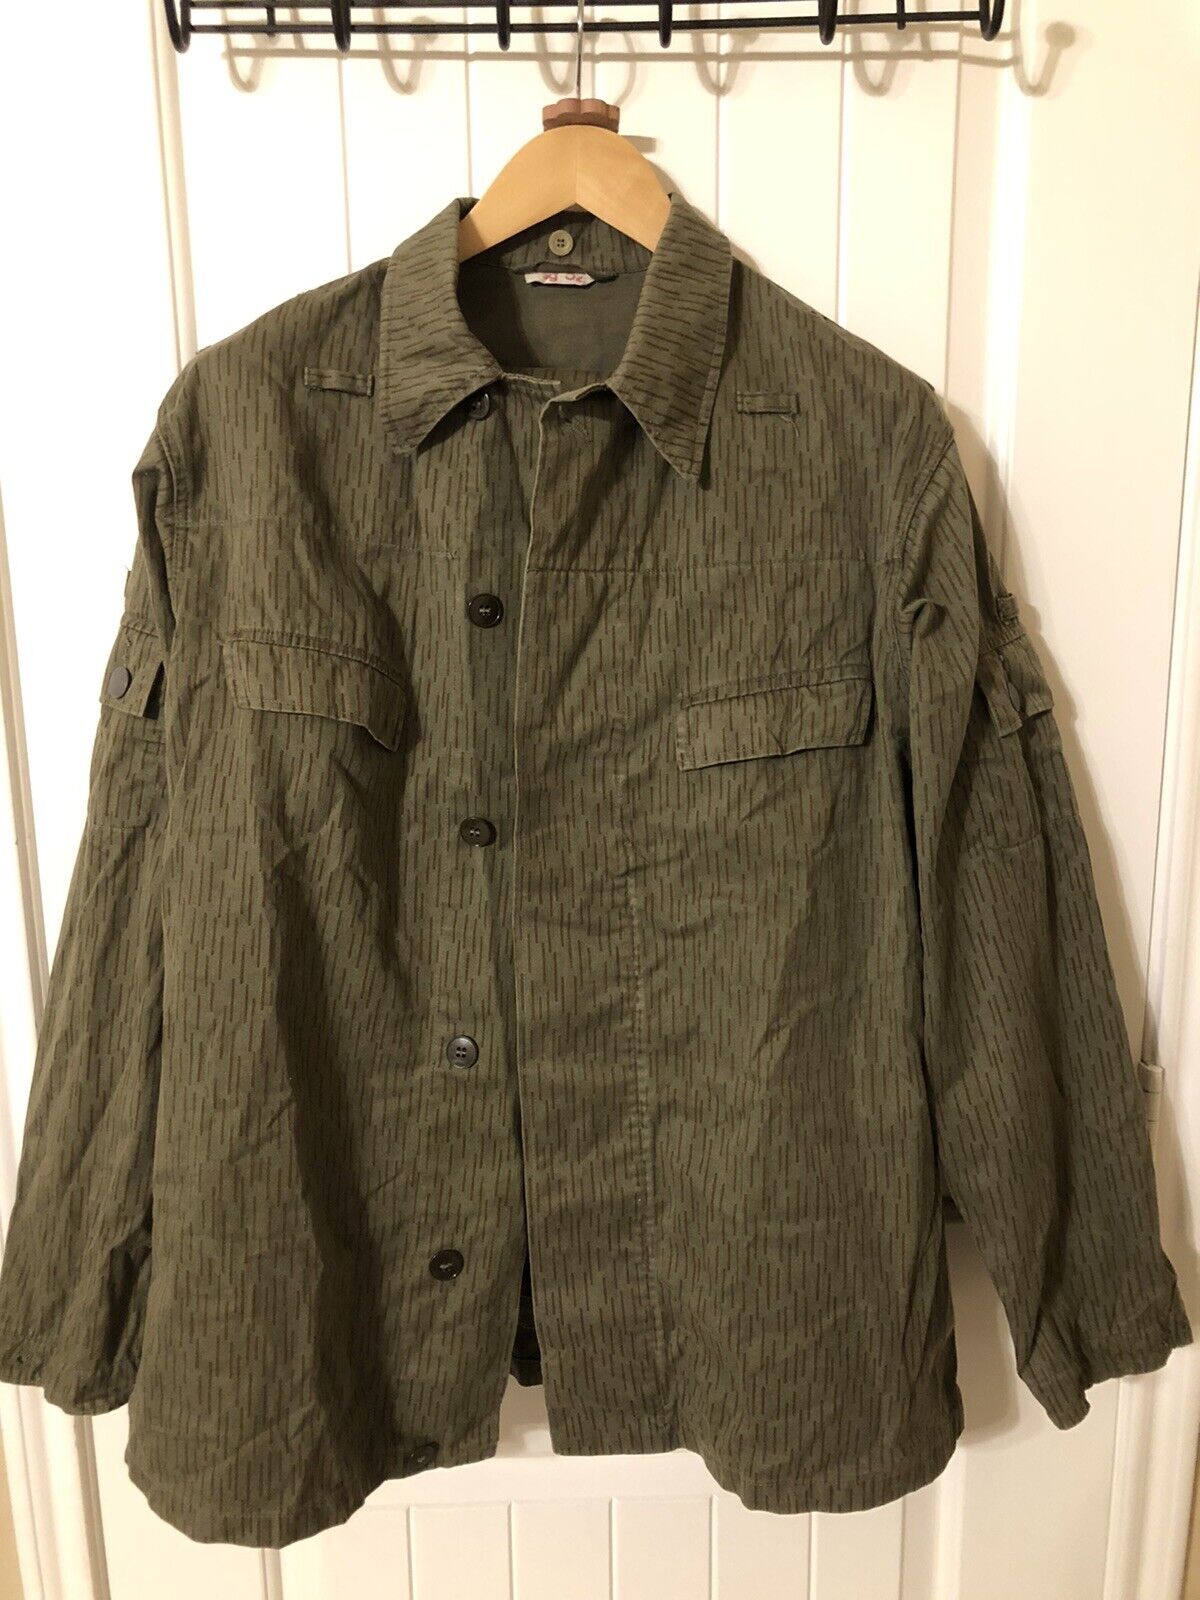 East German Strichtarn (Raindrop) camo field jacket and pants uniform ...